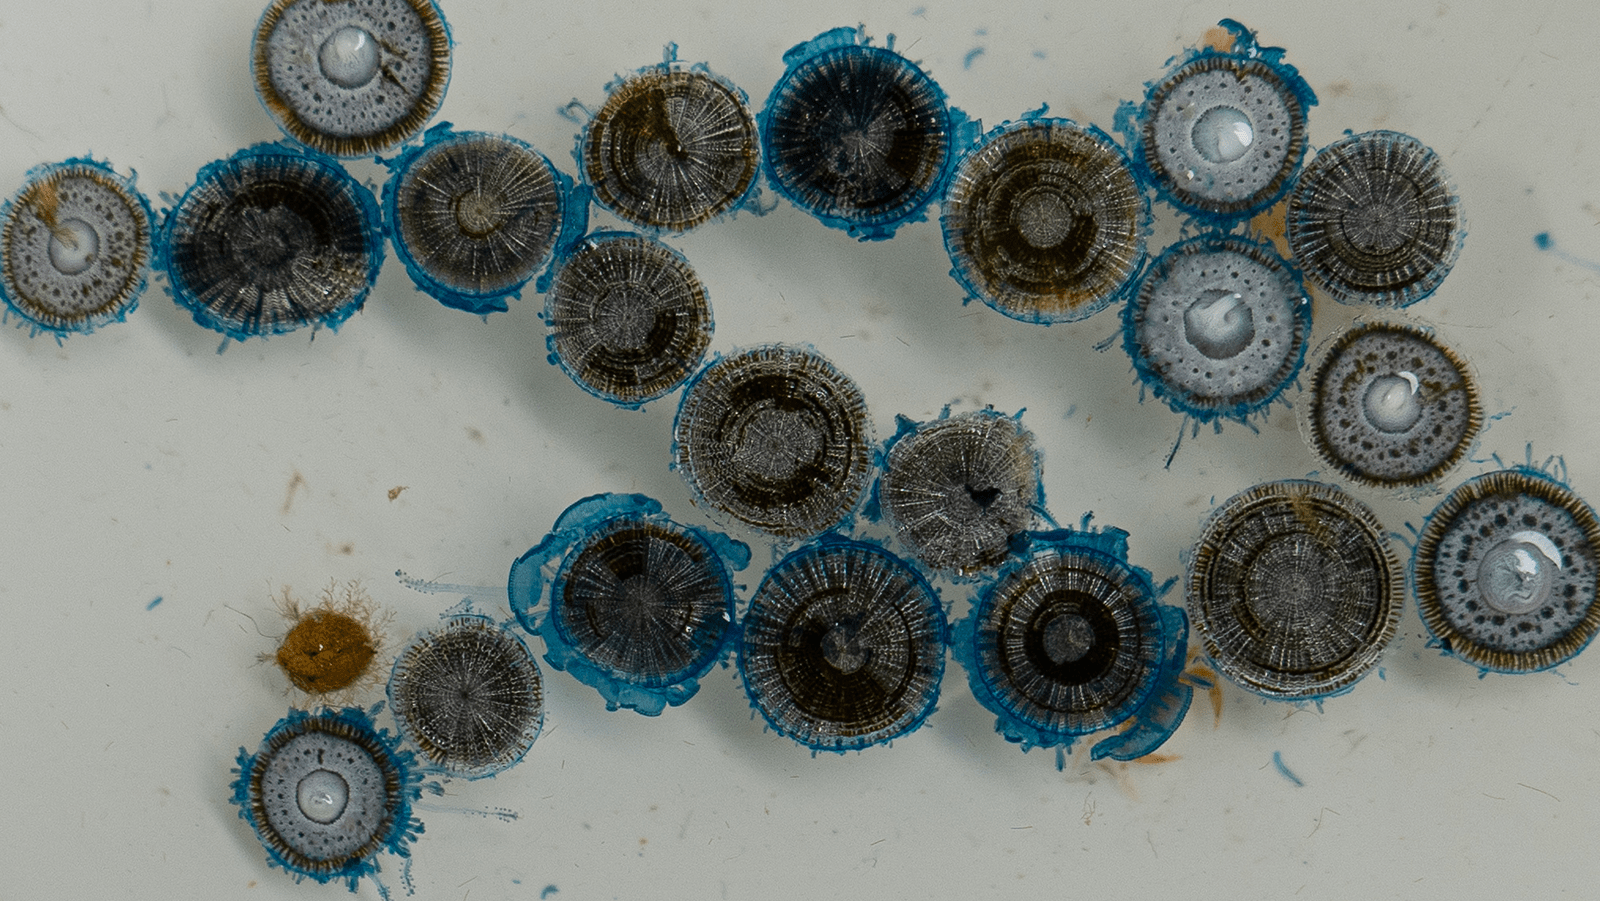 Organismos azules desconocidos encontrados adheridos a una boya PIRATA.